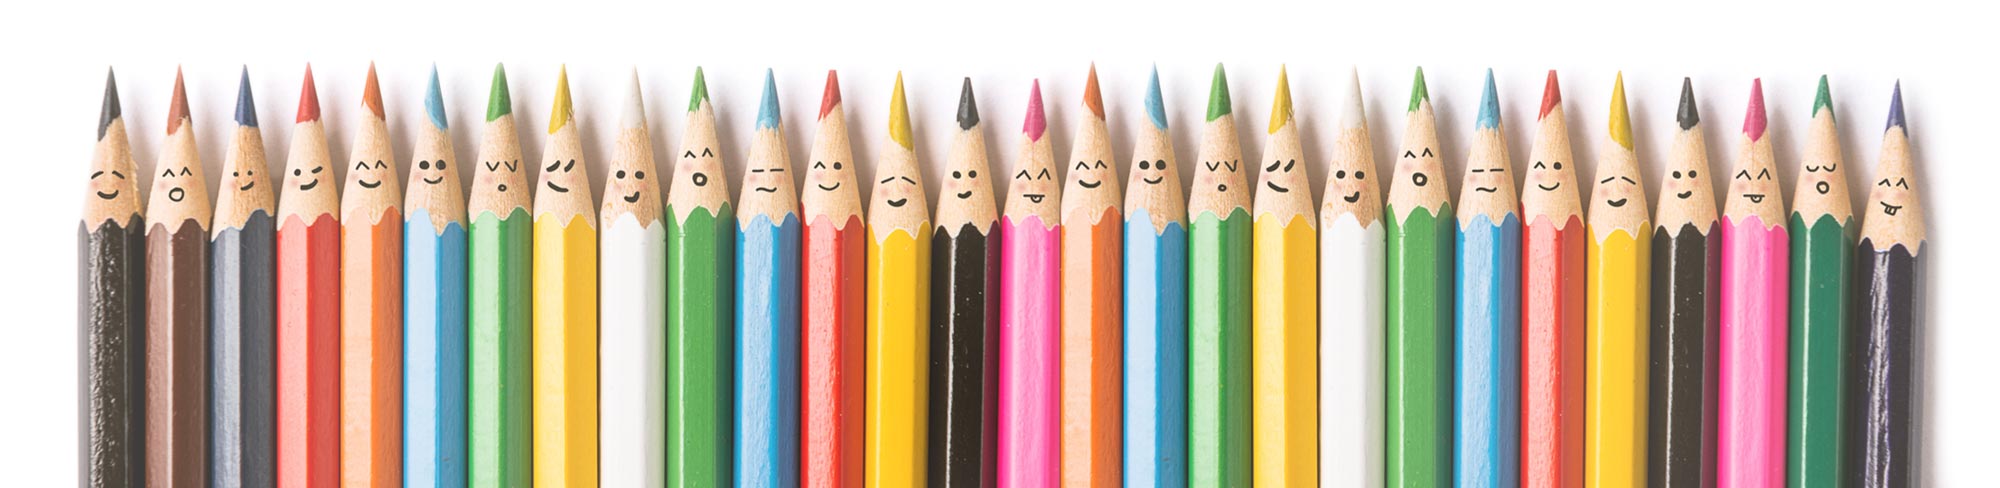 Colored Pencils Representing Diversity